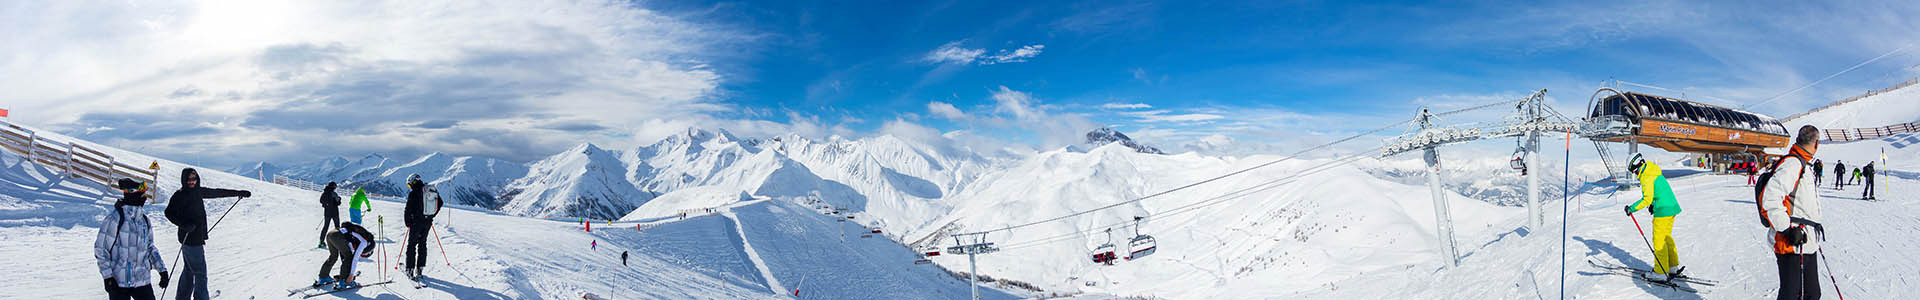 Val d'Allos ski resort